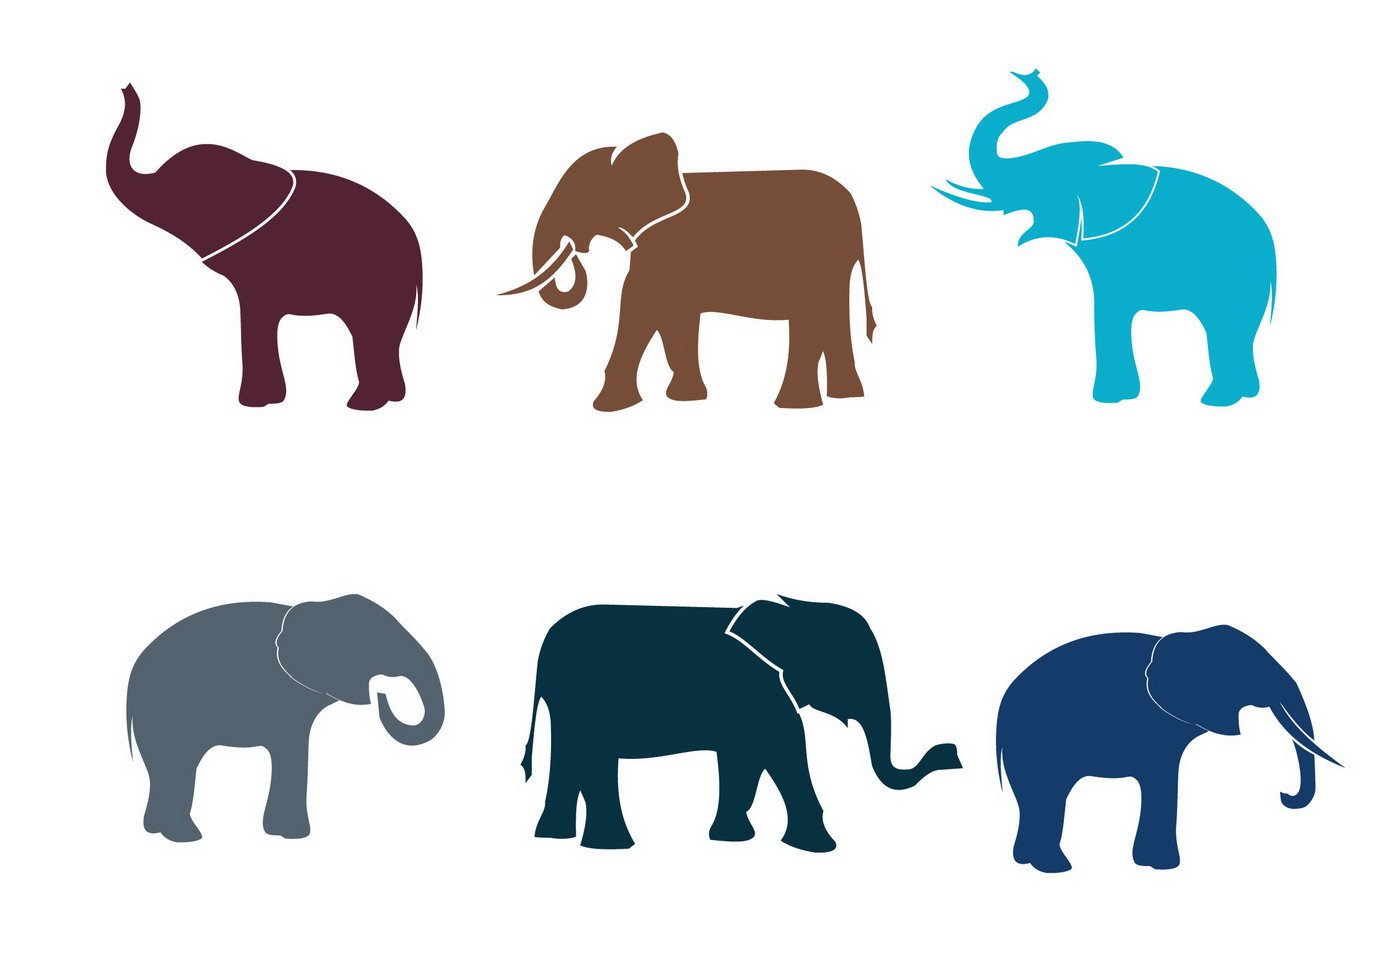 Elephant Free Vector Art - (4871 Free Downloads)